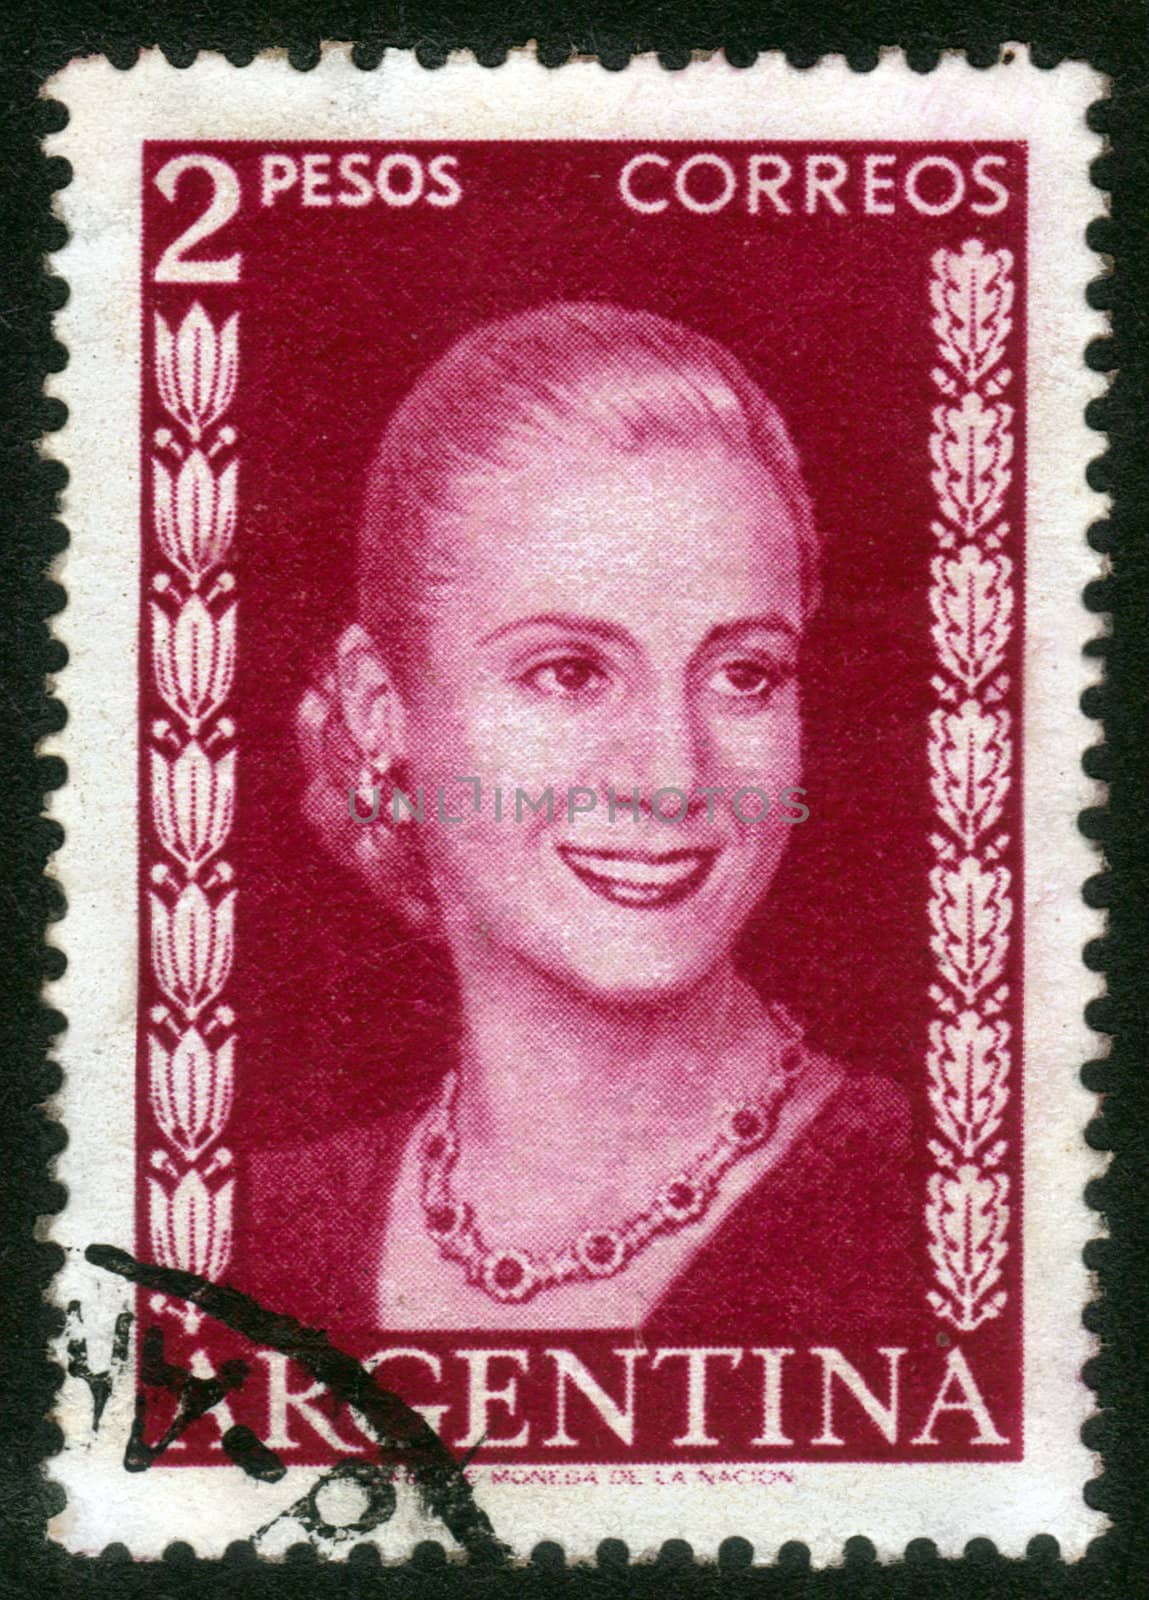 ARGENTINA - CIRCA 1948: A stamp printed in Argentina shows image of a political leader of Argentina, Maria Eva Duarte de Peron, circa 1948